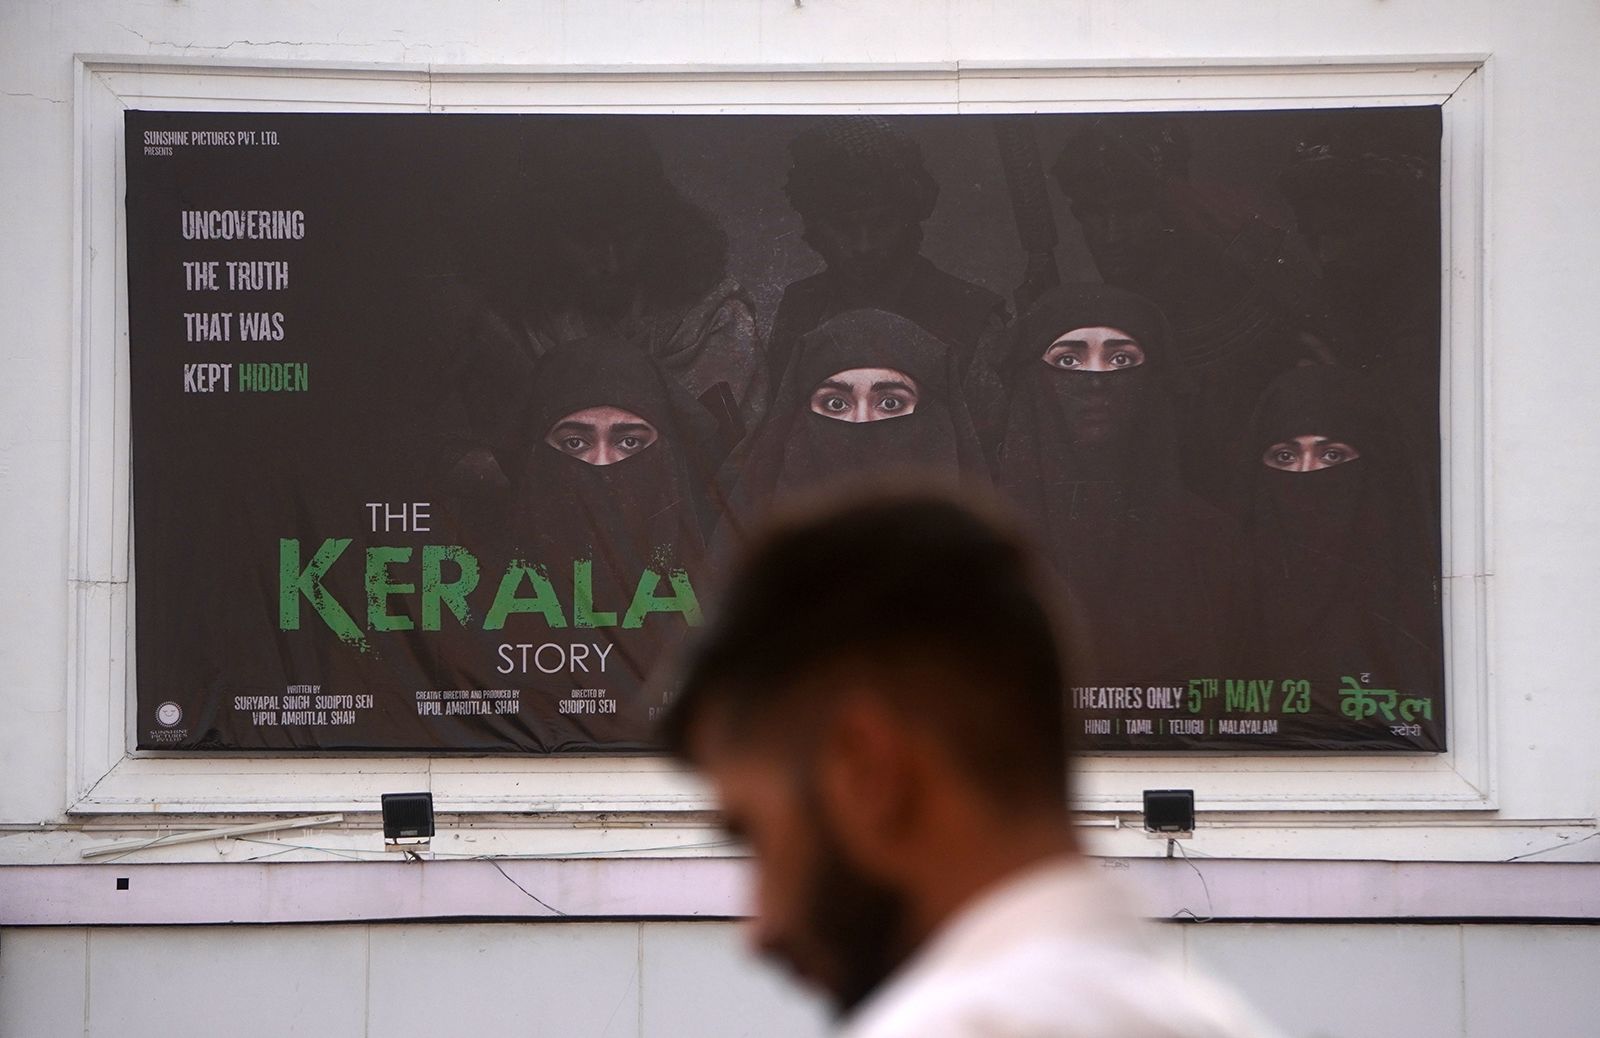 Kerala Scool Bebysex - The Kerala Story' is a box office hit in India. It also vilifies Muslims,  critics say. | CNN